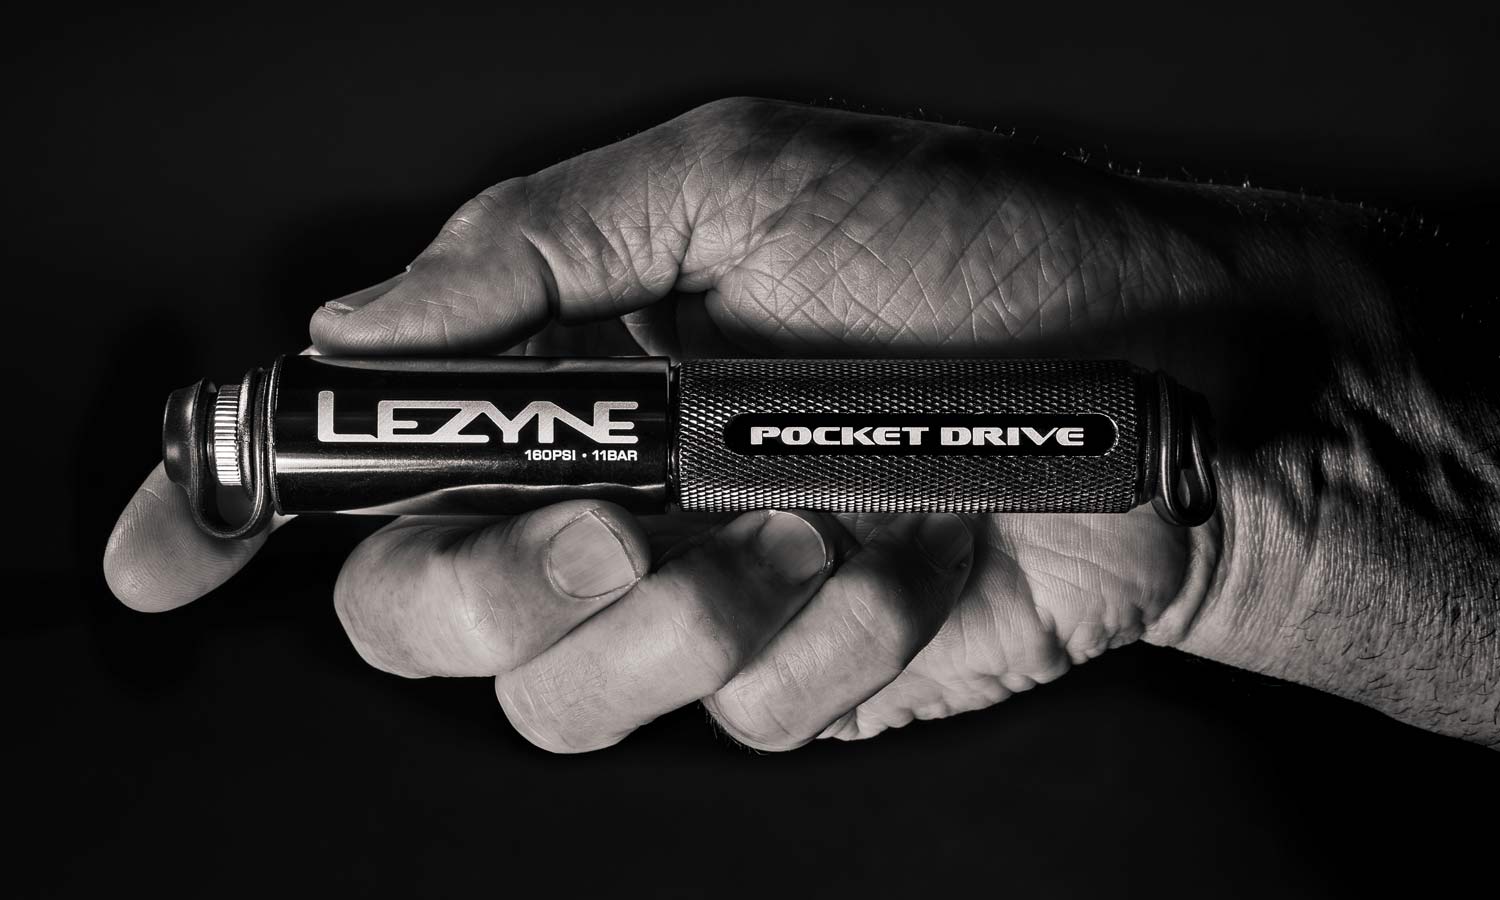 Lezyne Pocket Drive mini-pump, tiny compact all alloy lightweight road bike hand pump